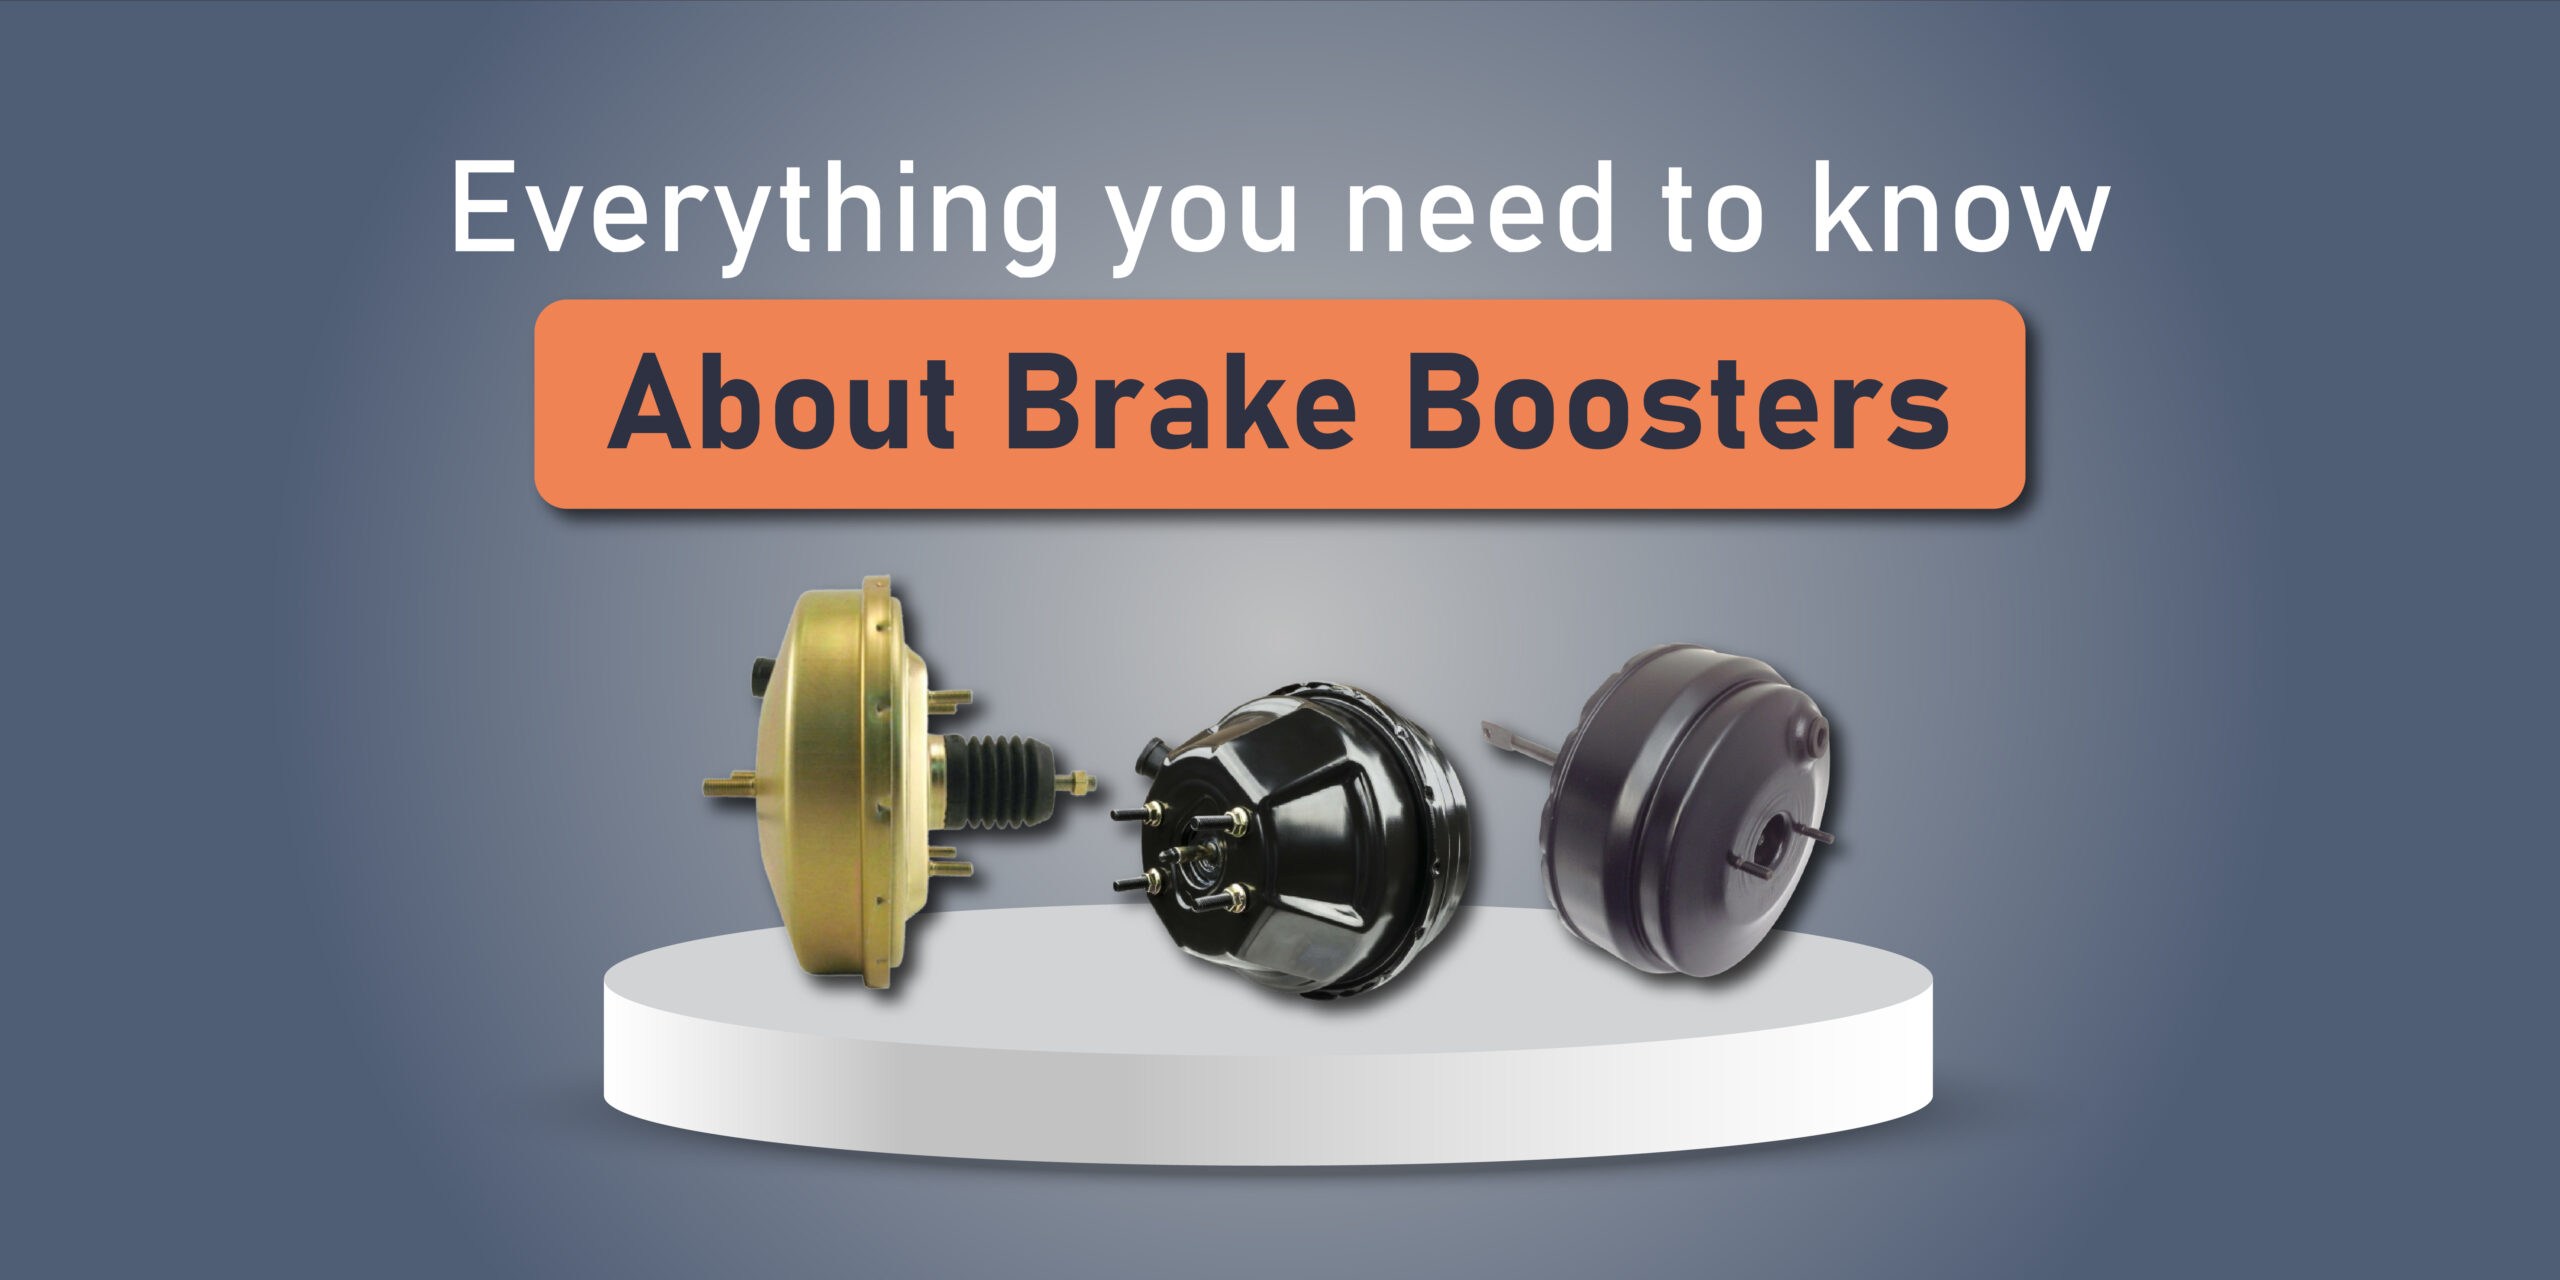 Brake Boosters|brake boosters